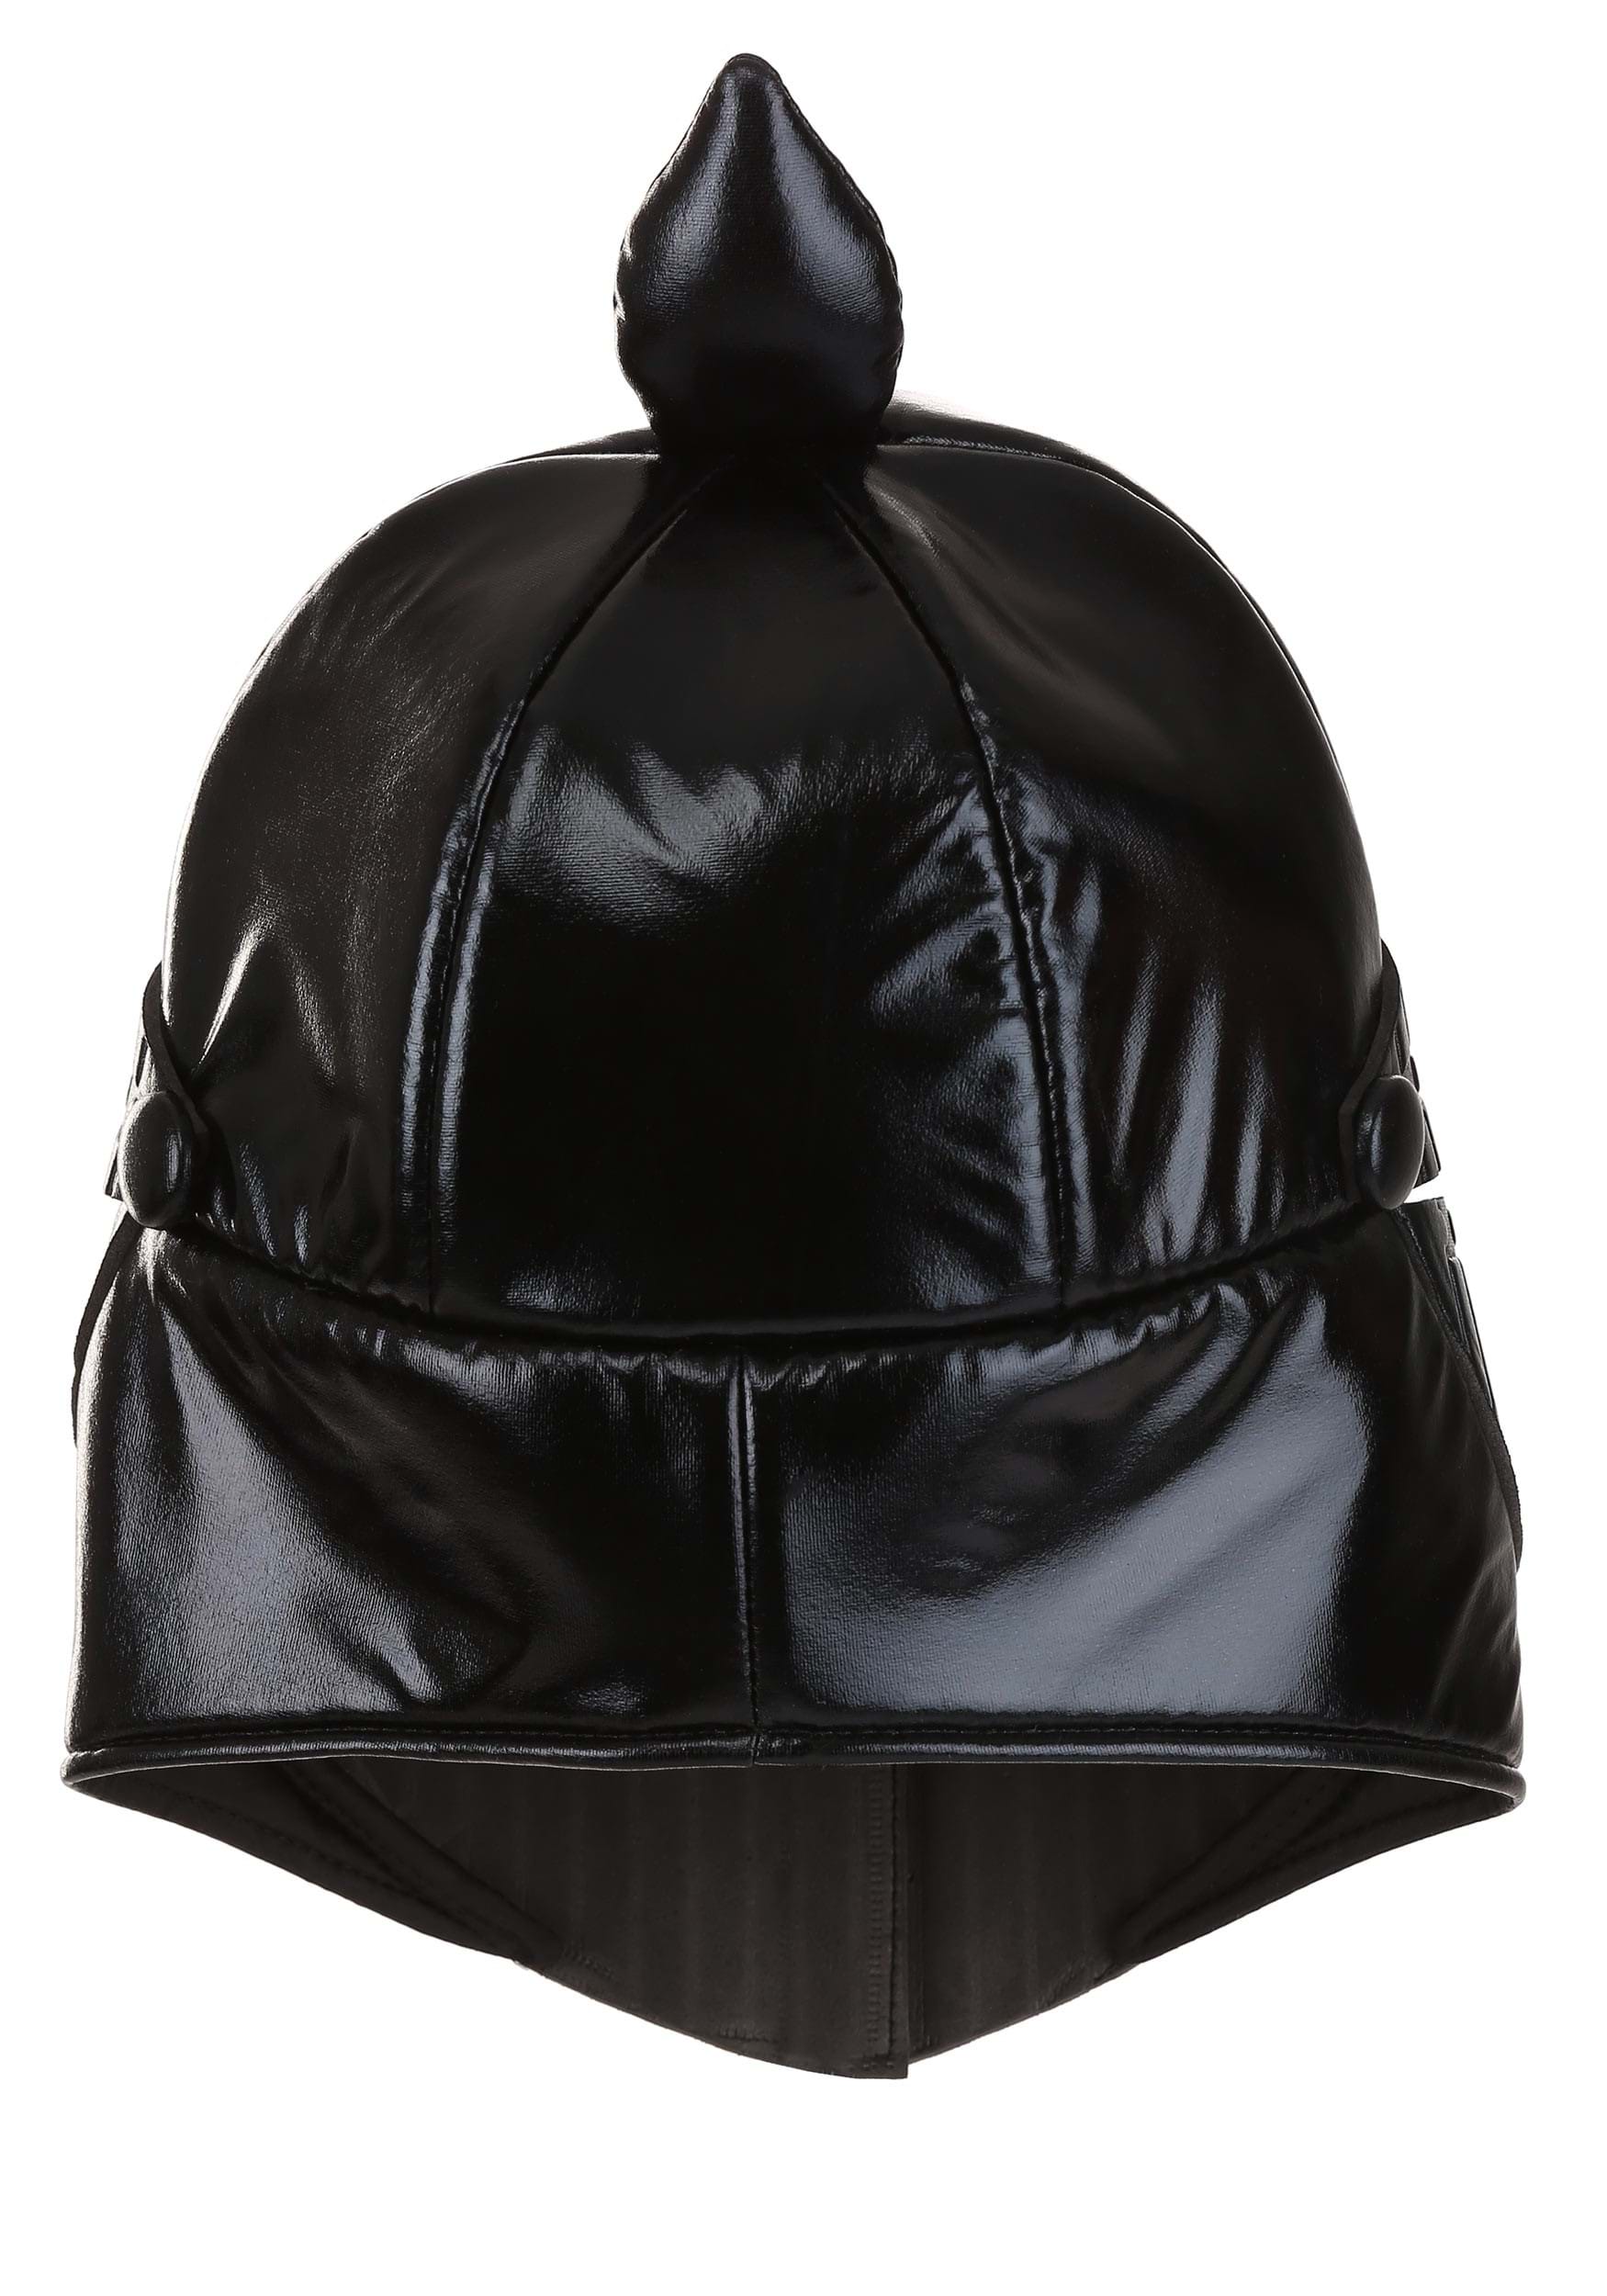 Foam Black Knight Costume Helmet , Medieval Accessories